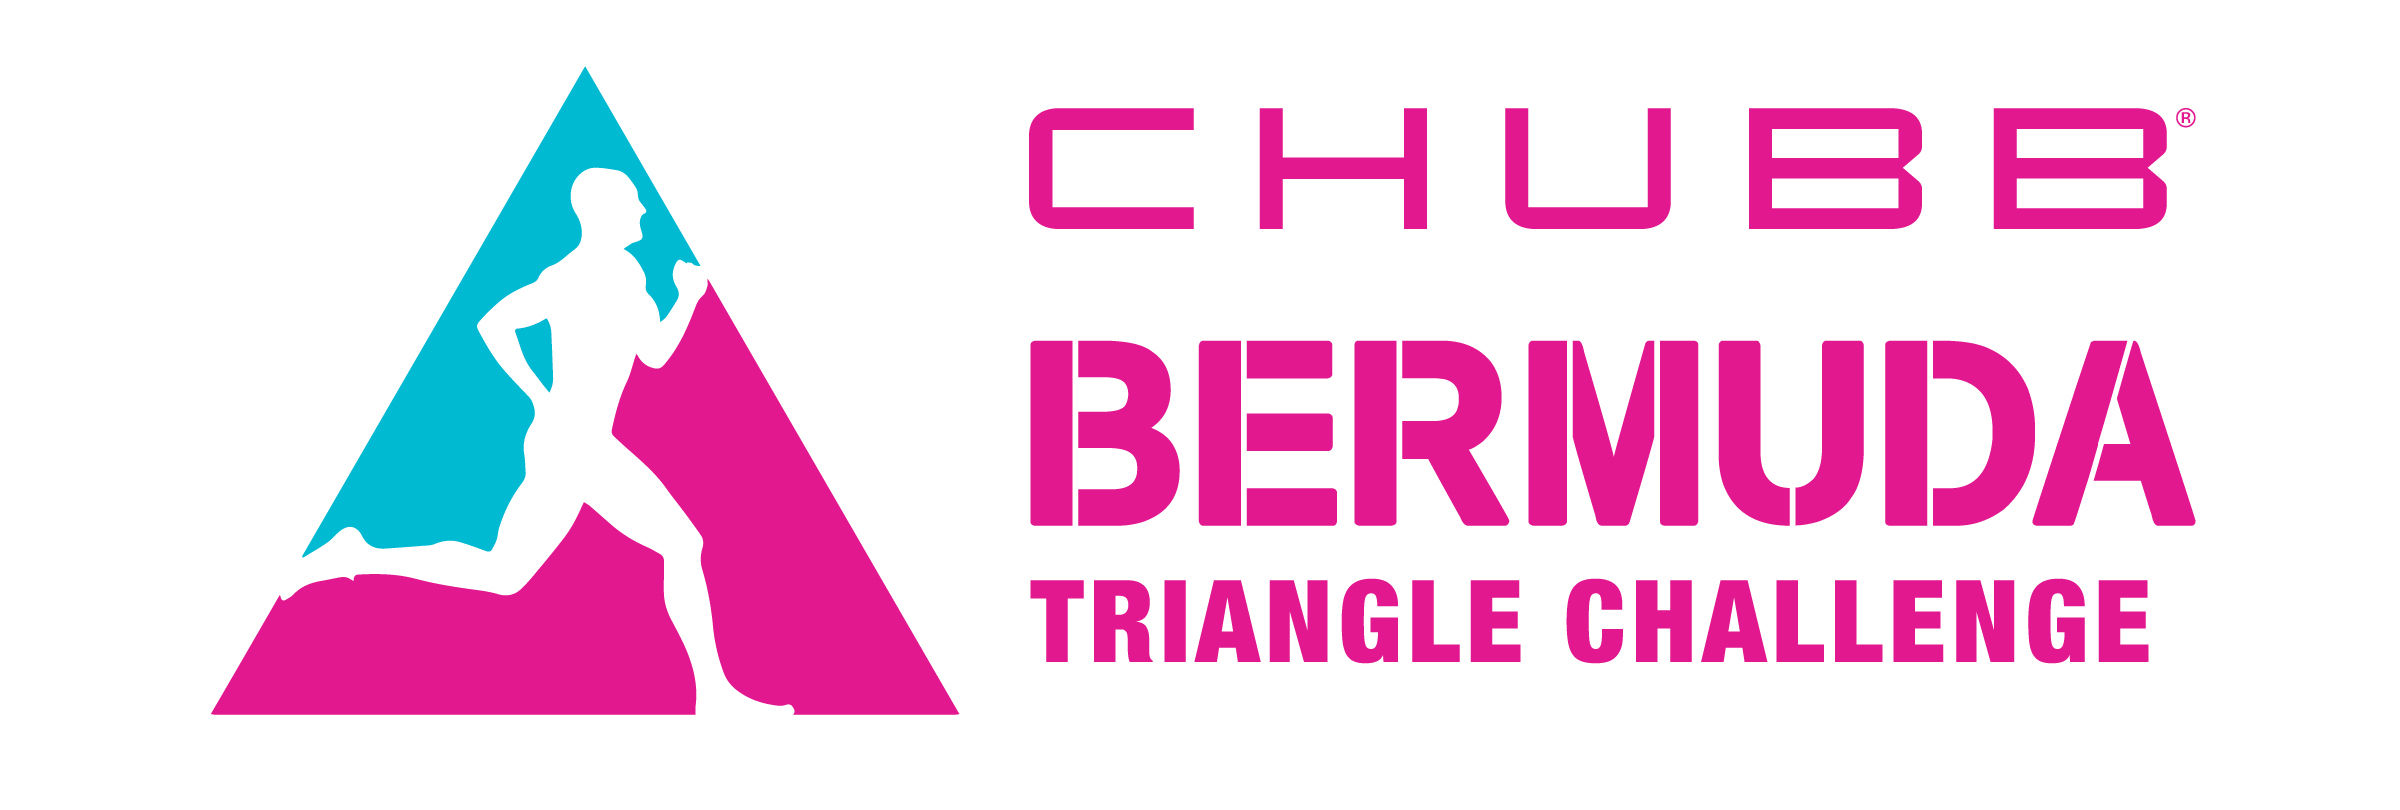 Chubb Bermuda Triangle Challenge